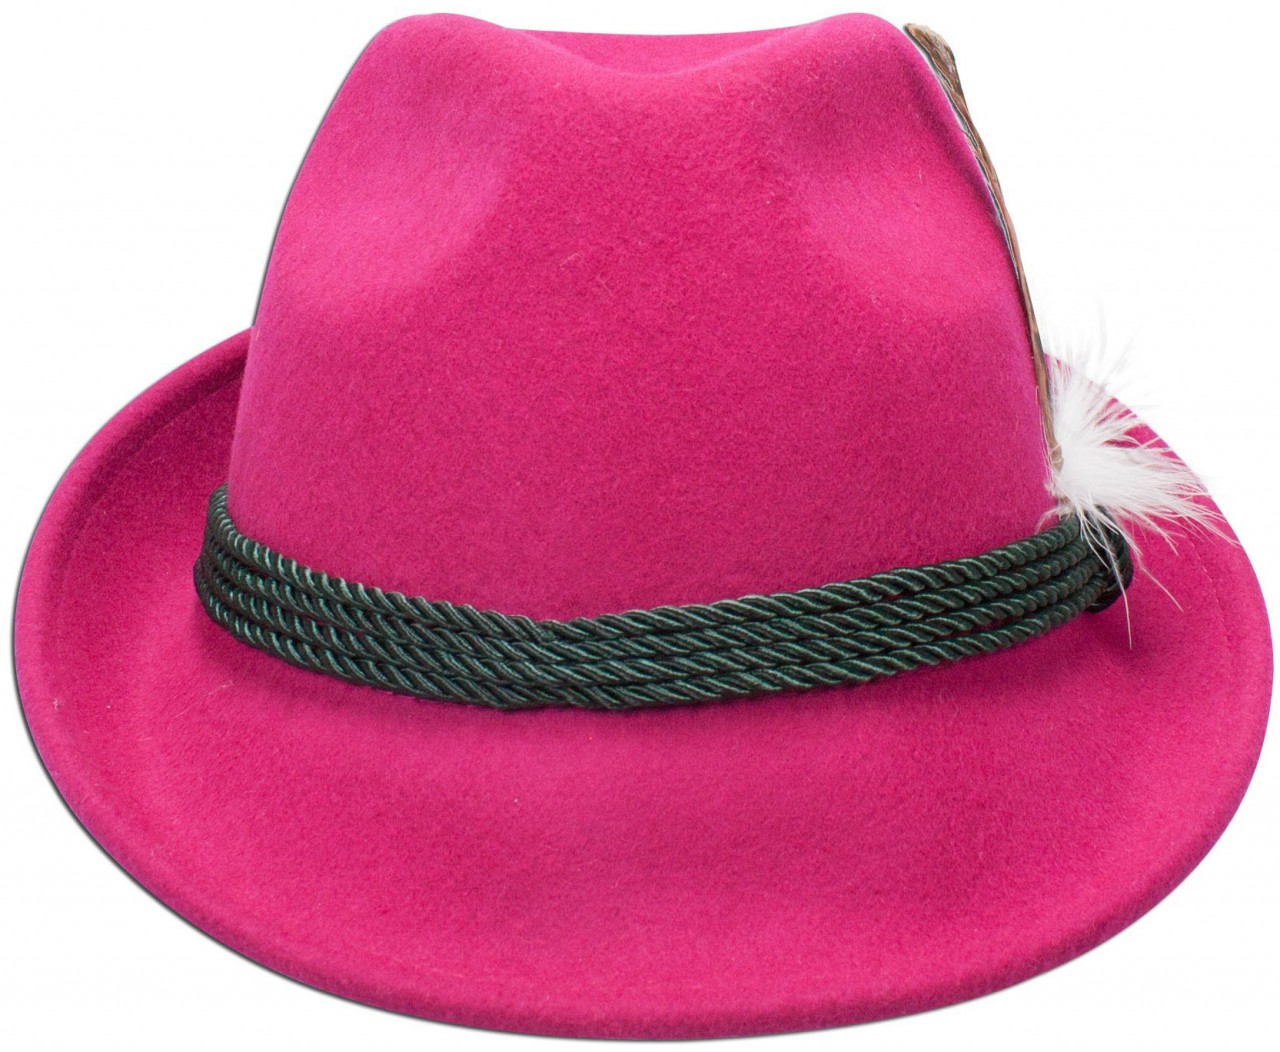 Trachten Felt Hat with Feather, Pink